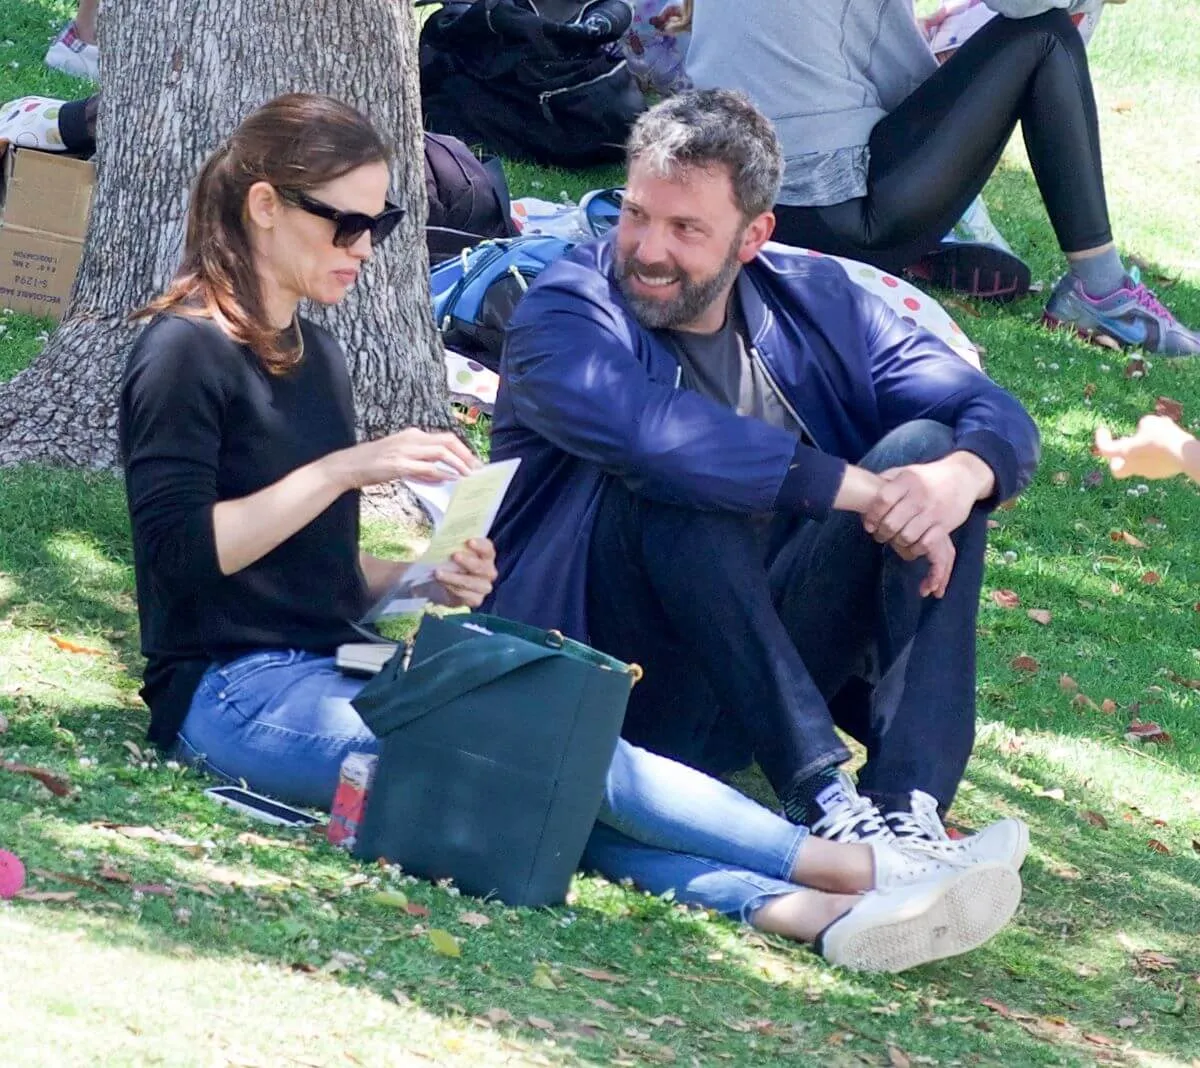 Jennifer Garner and Ben Affleck sit together on the grass under a tree. She wears sunglasses.